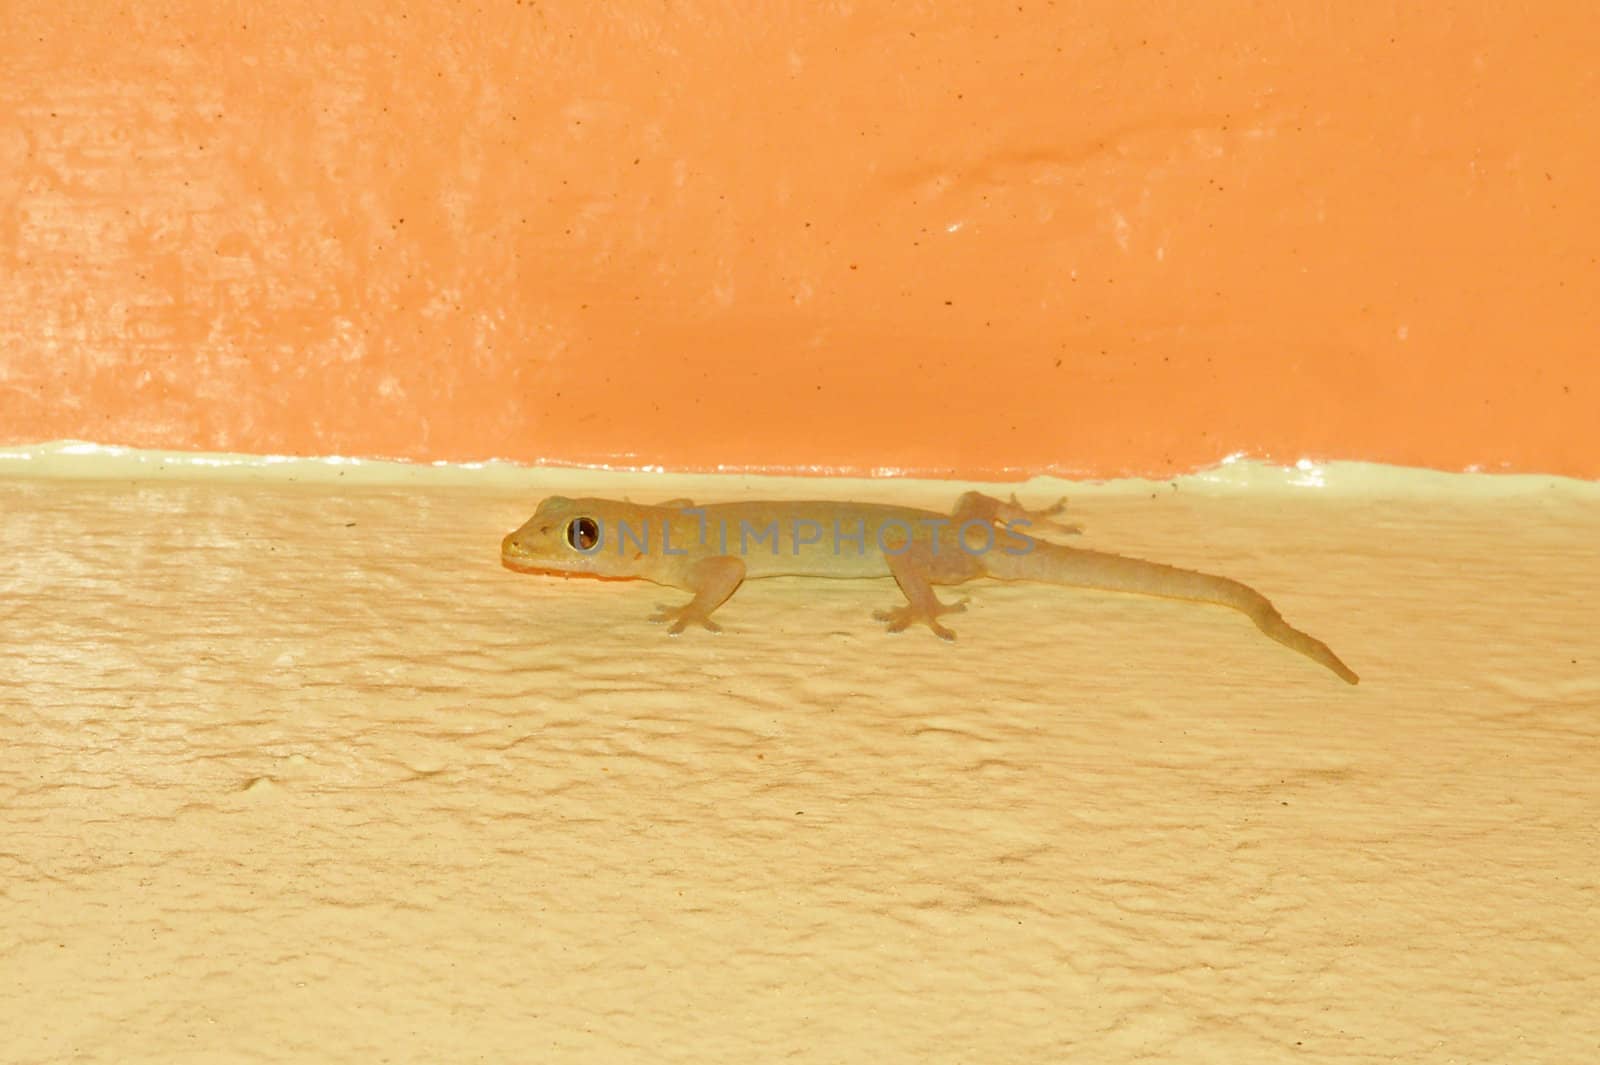 A House Gecko (Hemidactylus frenatus) on a wall in Cairns, Queensland - Australia.